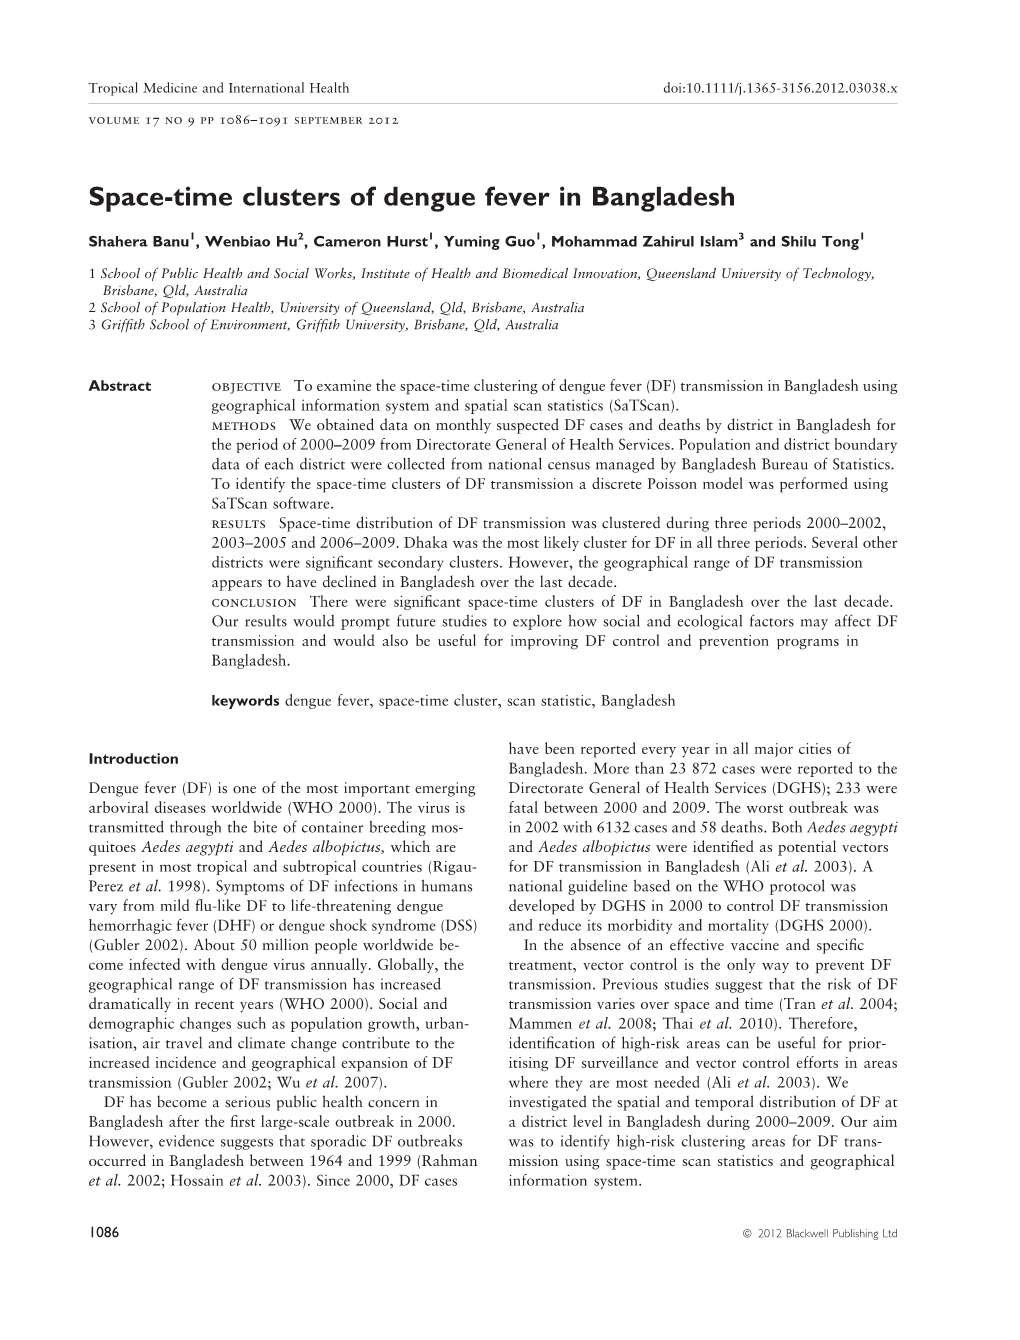 Spacetime Clusters of Dengue Fever in Bangladesh